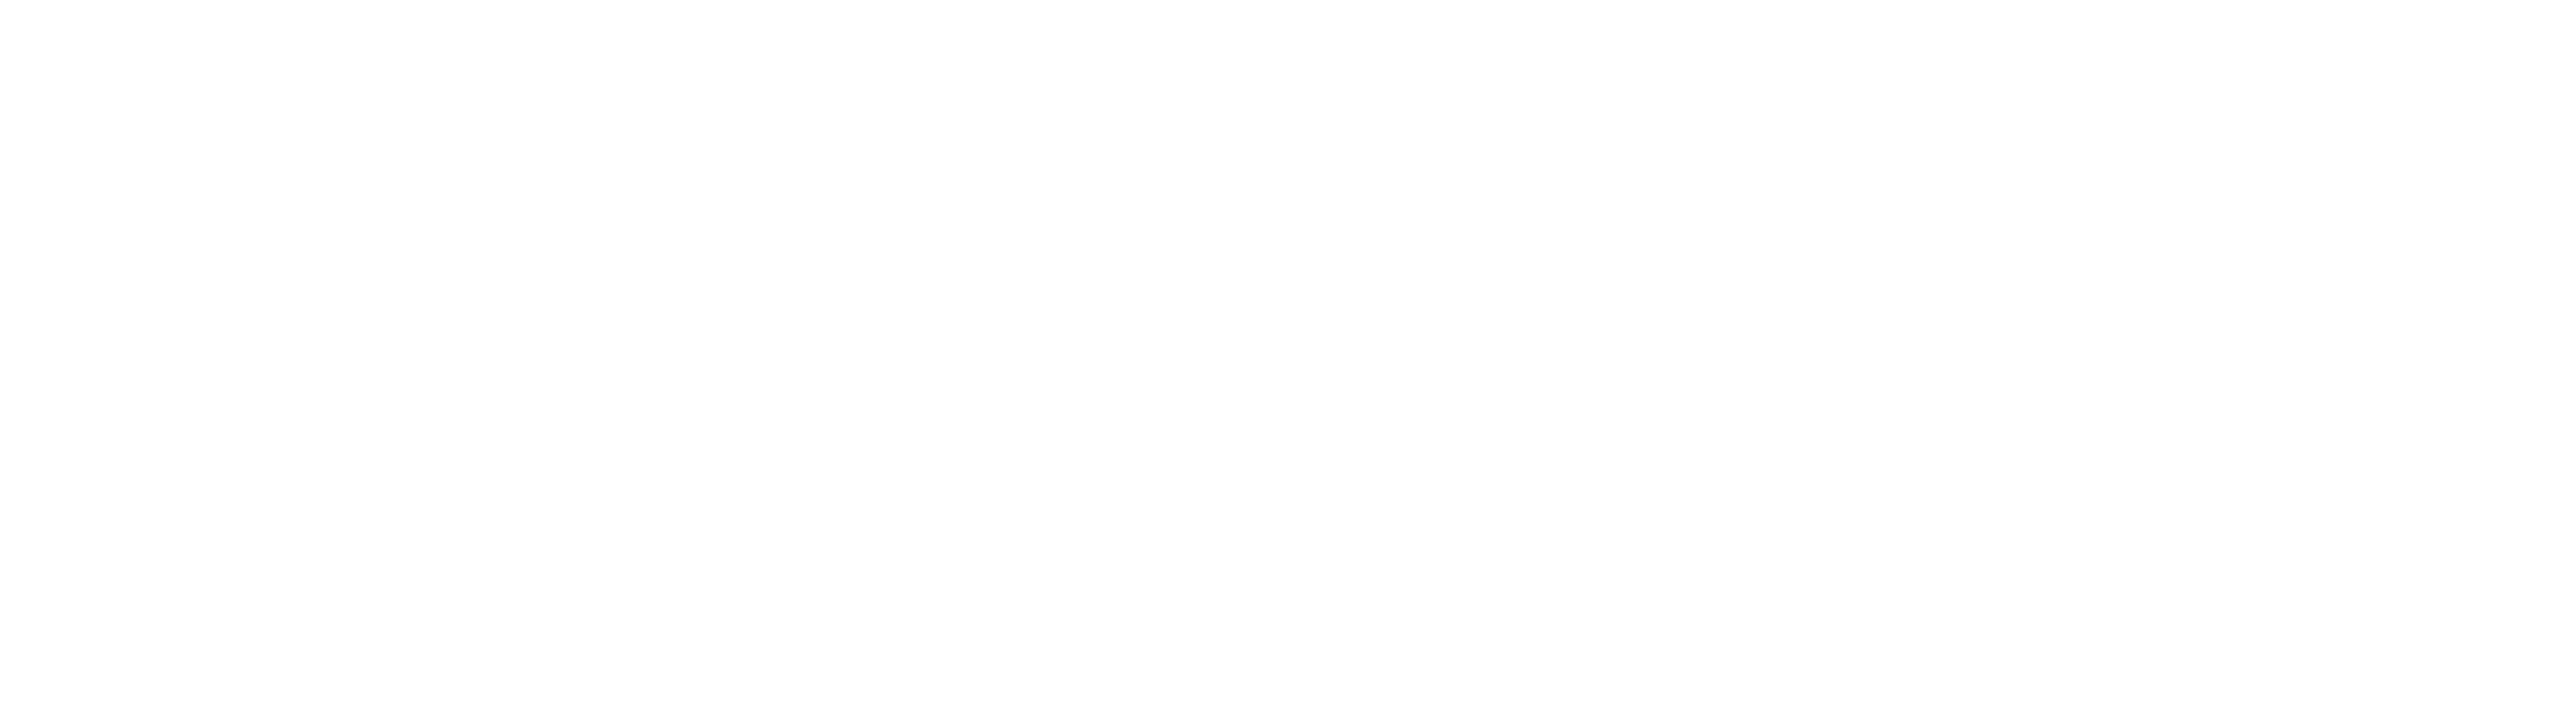 Abbie Ede